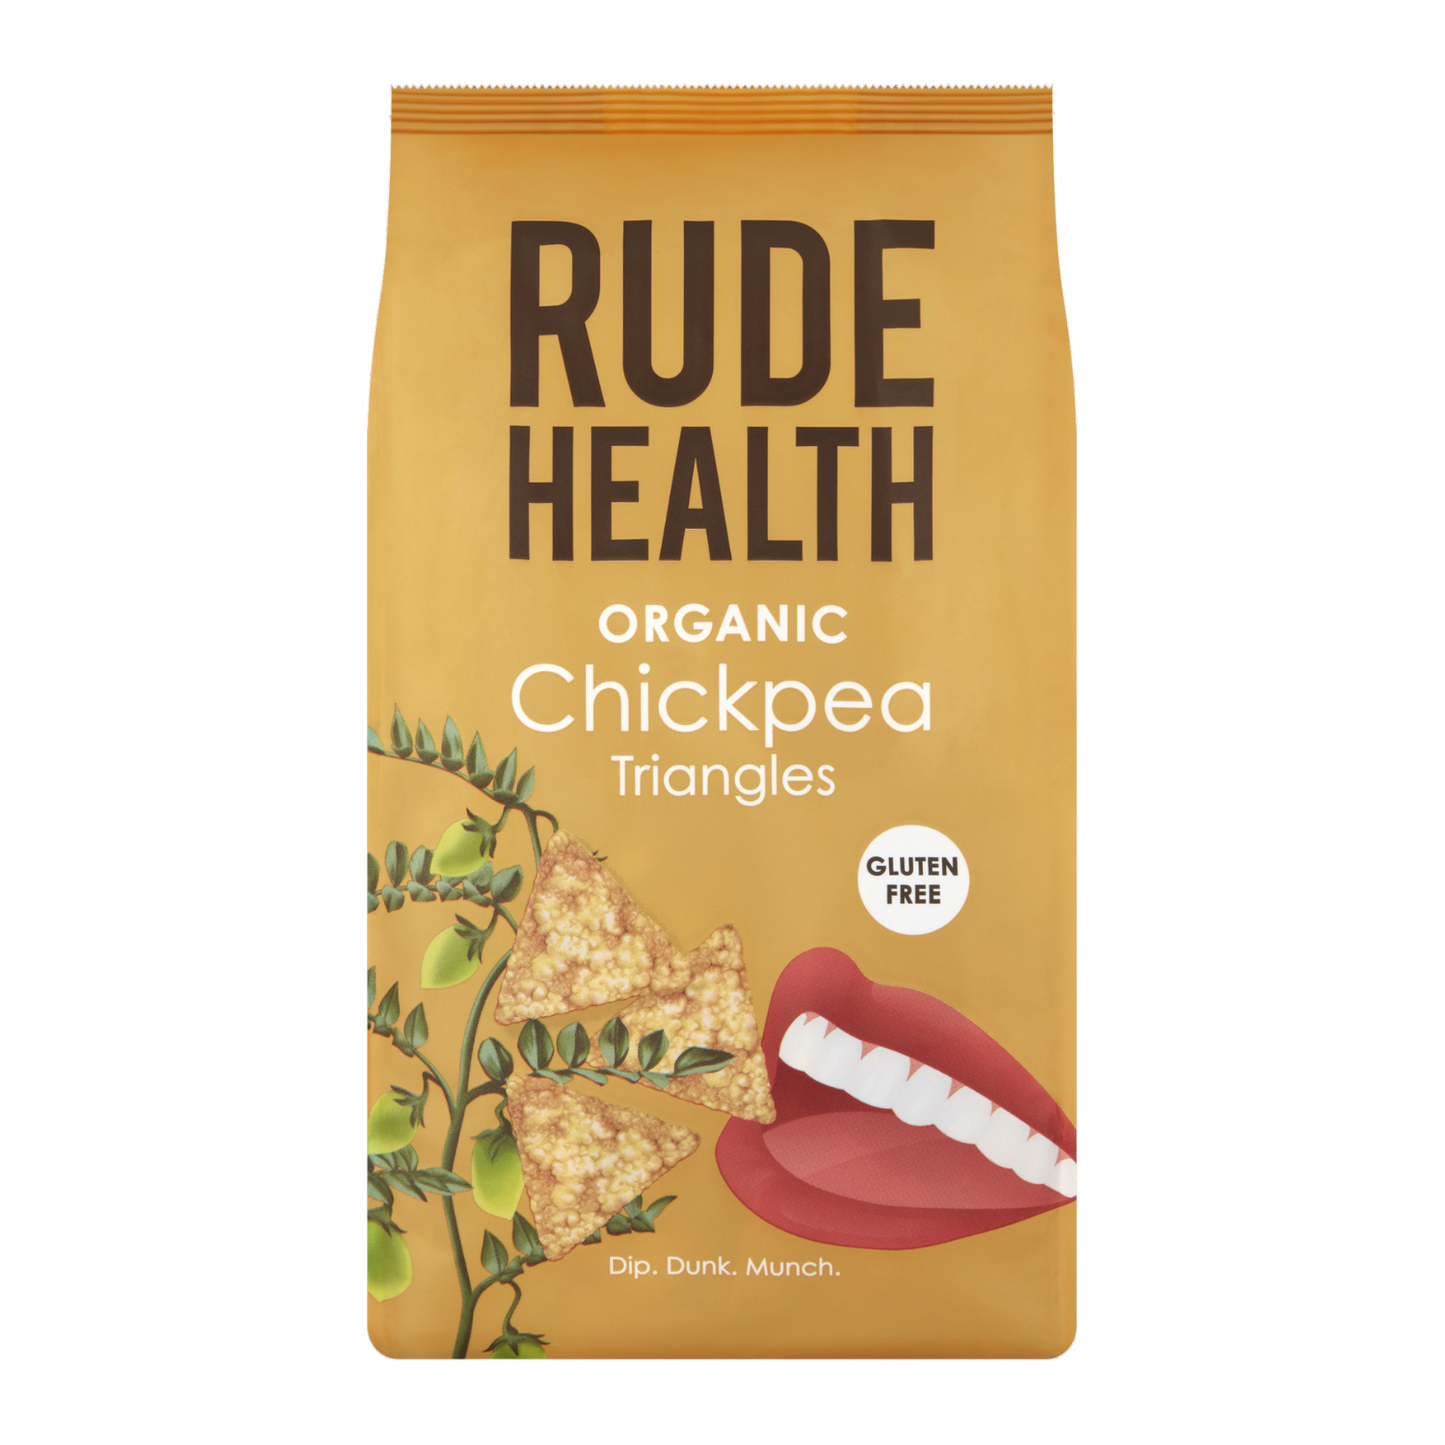 Rude Health Organic Chickpea Triangles, 80g.